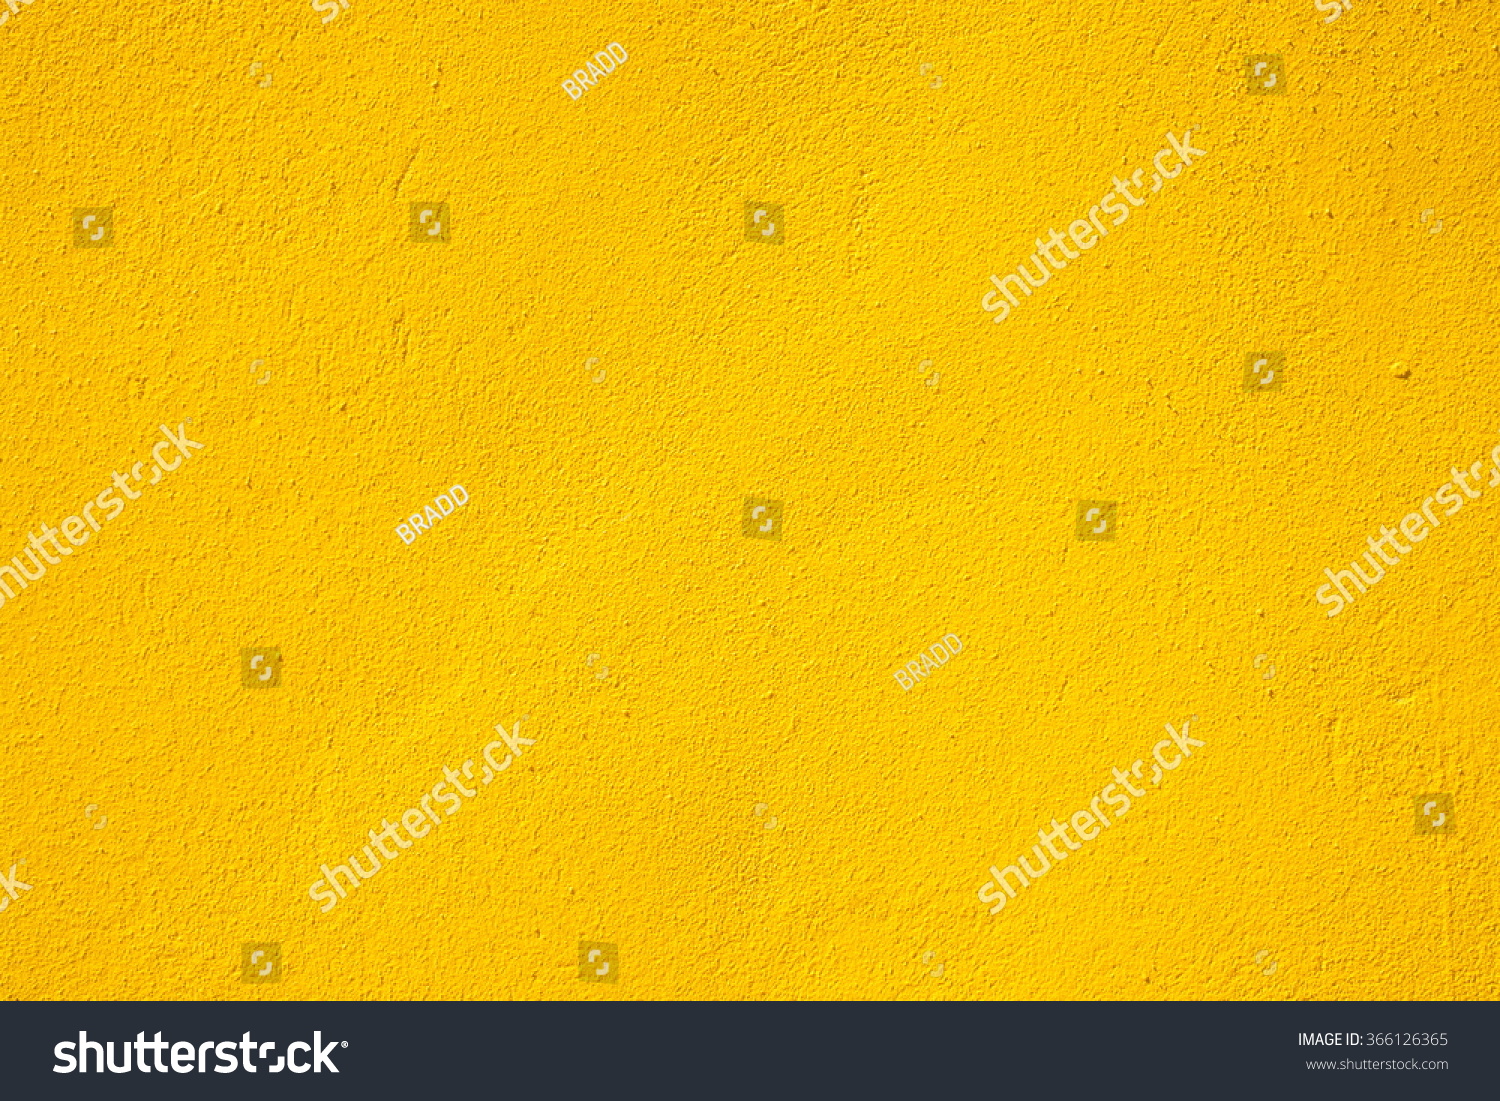 Yellow wall texture #366126365